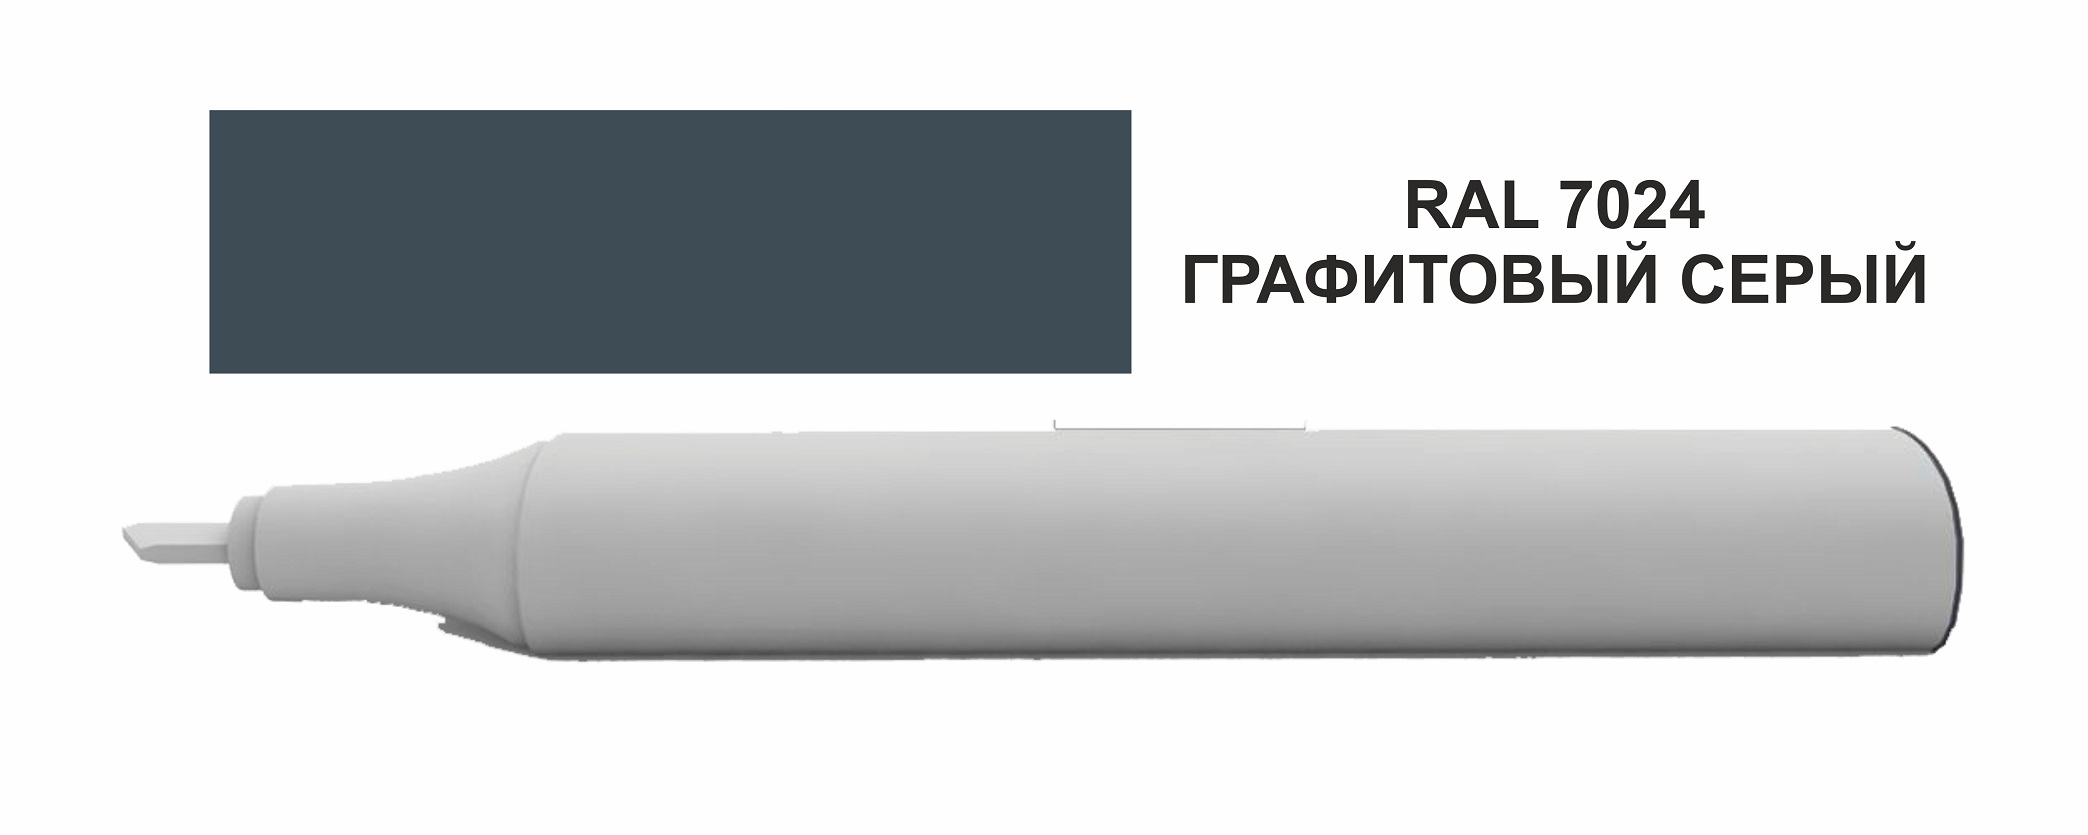 Корректор для ремонта царапин, цвет графитовый серый (RAL 7024)